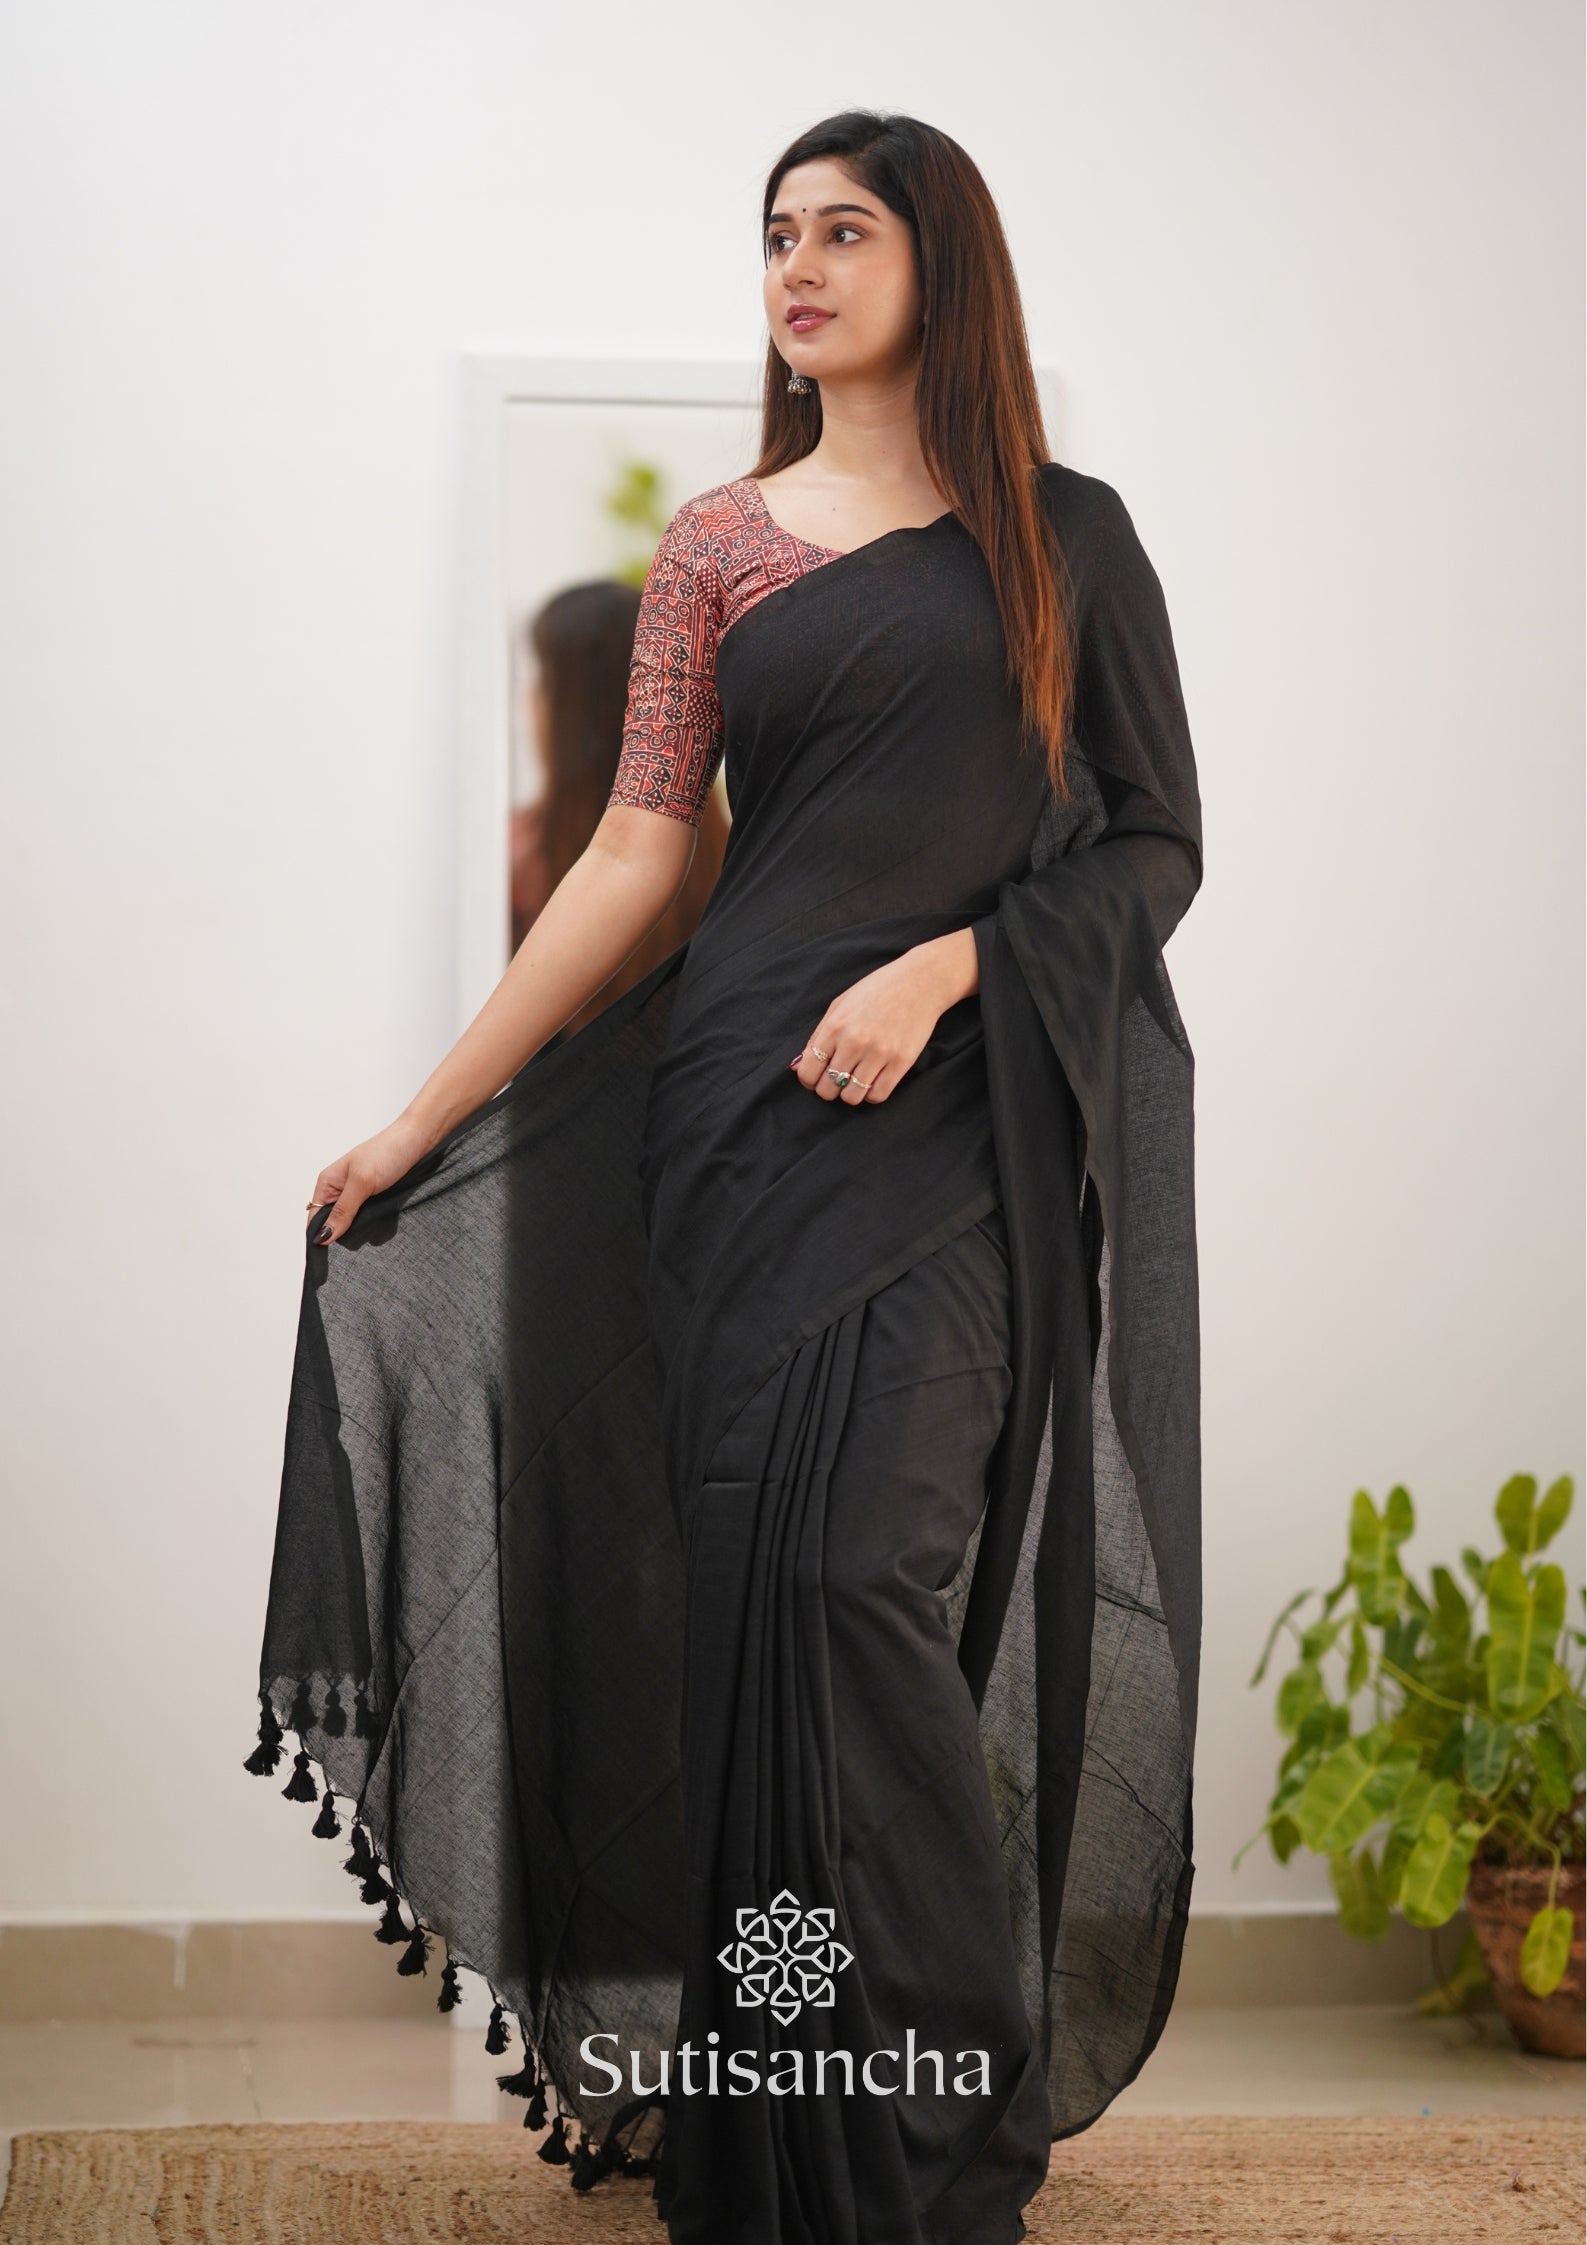 Sutisancha Black Handloom Cotton Saree With Designer Blouse